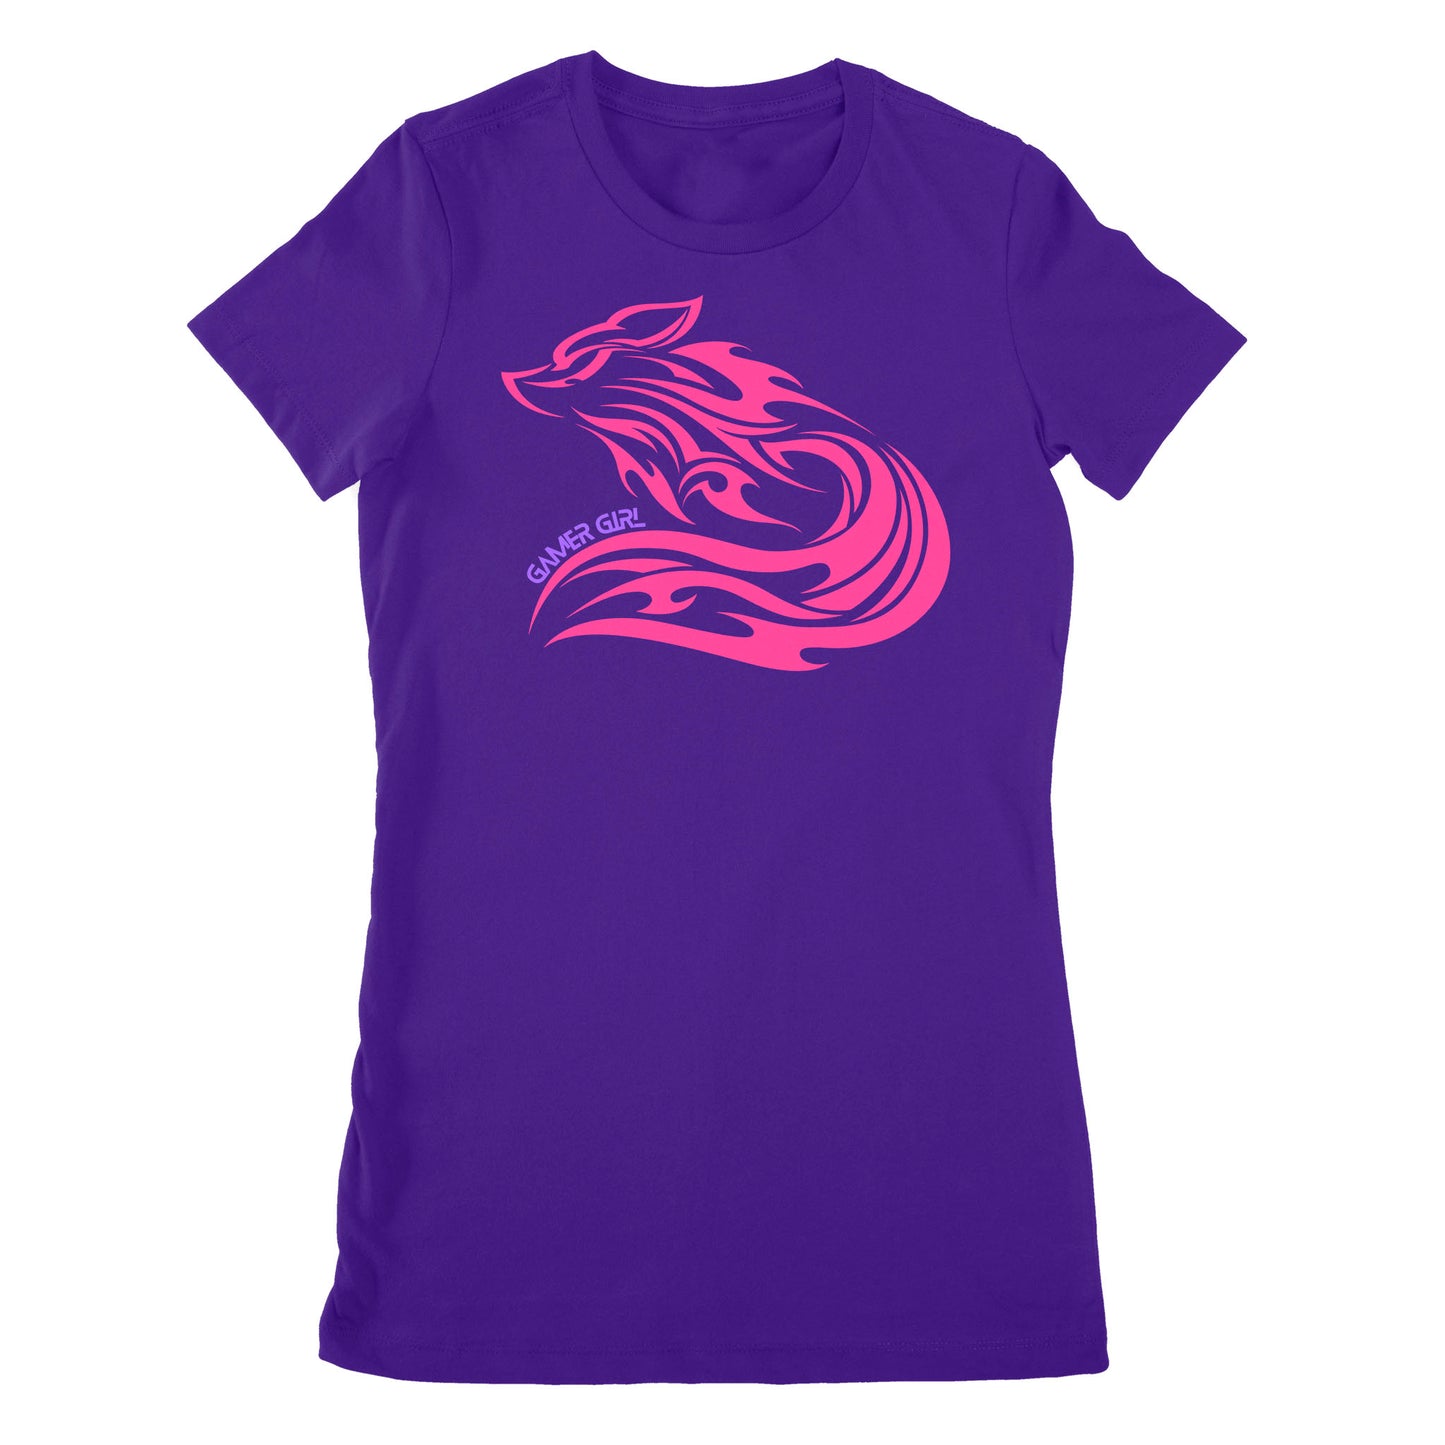 Gamer Girl Pink Fox - Premium Women's T-shirt